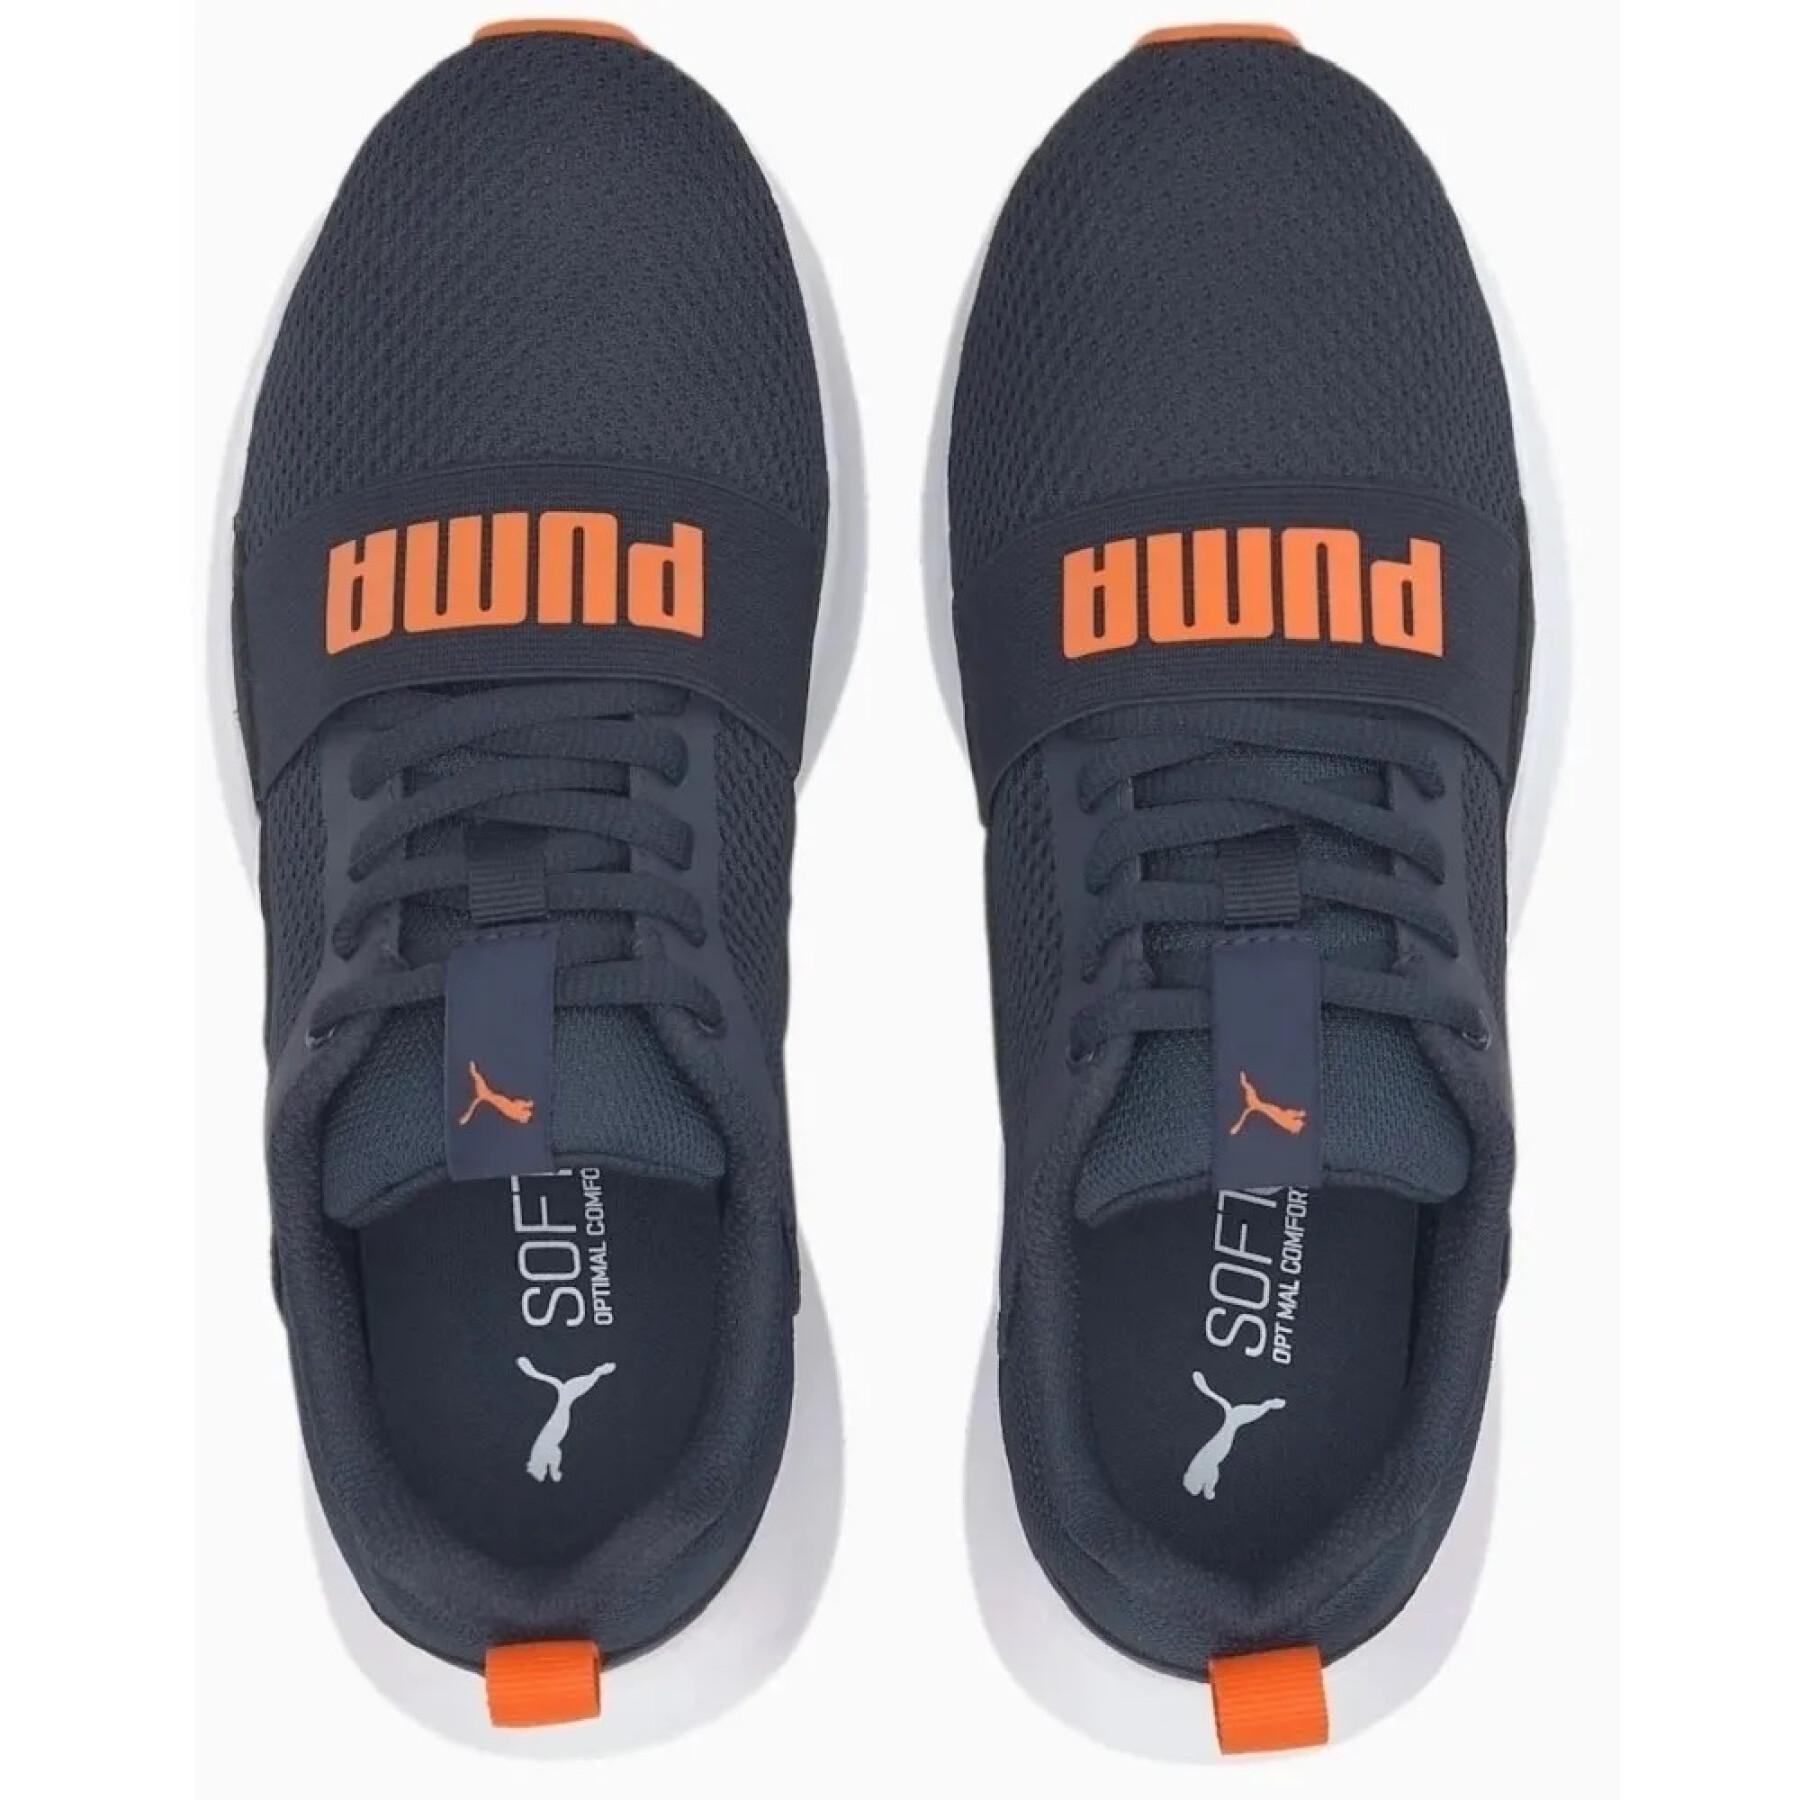 Children's shoes Puma puma wired